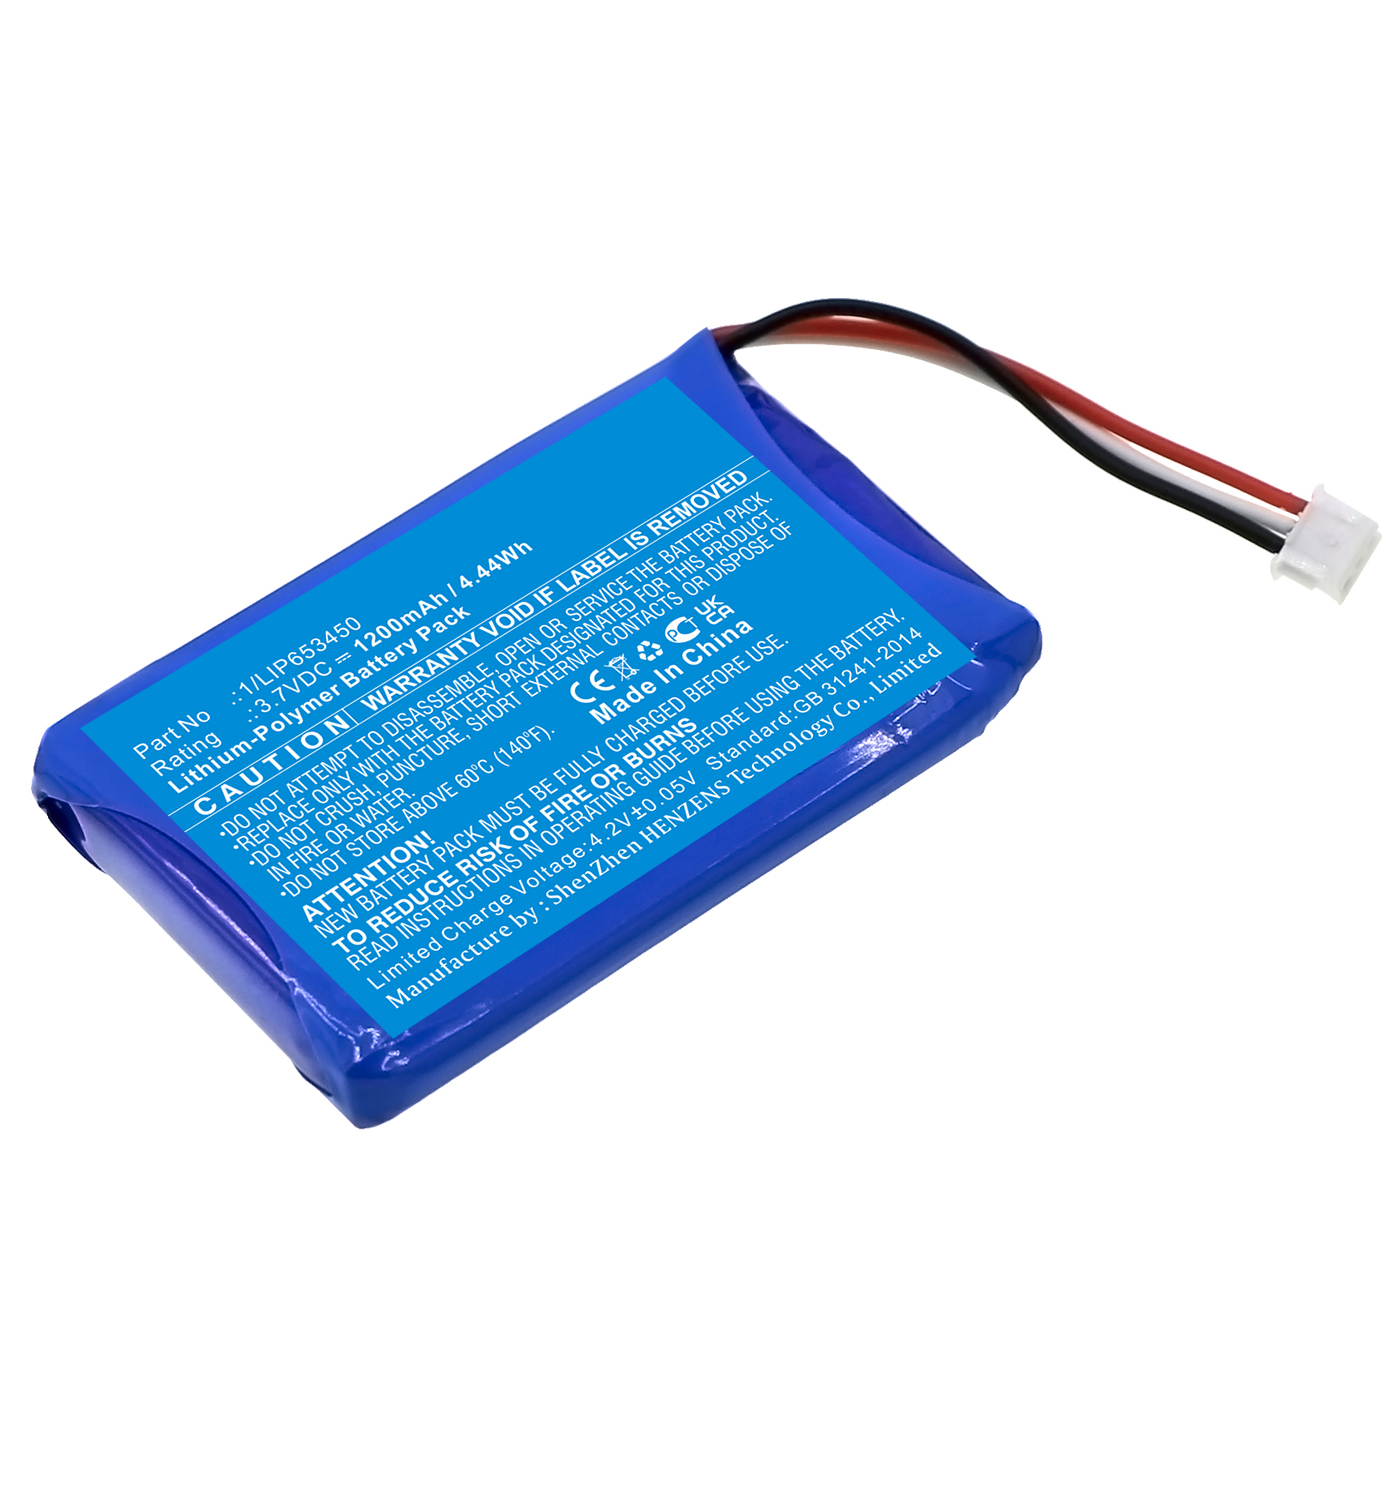 Batteries for Range RoverRemote Control